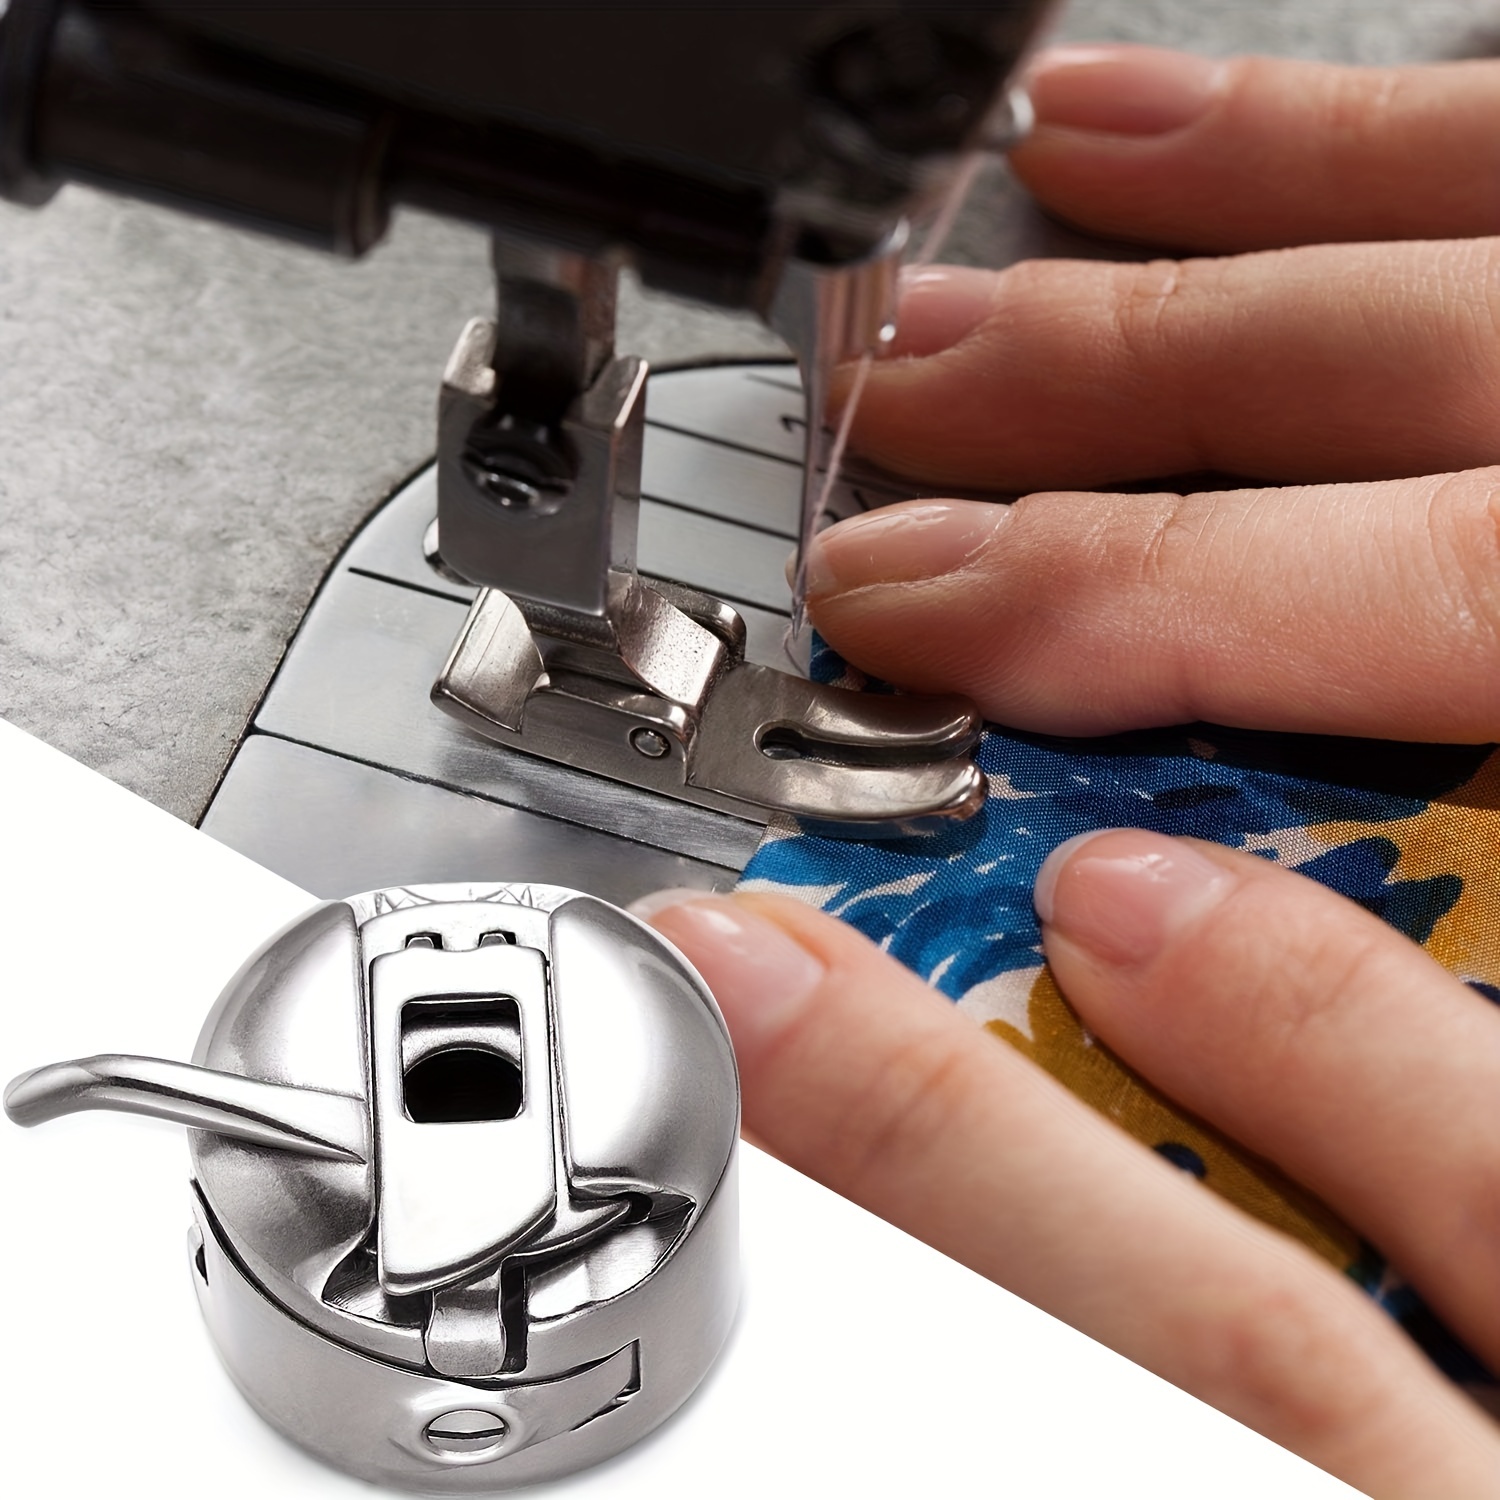 Sewing Machine Bobbin Case And Singer Sewing Machine Bobbins